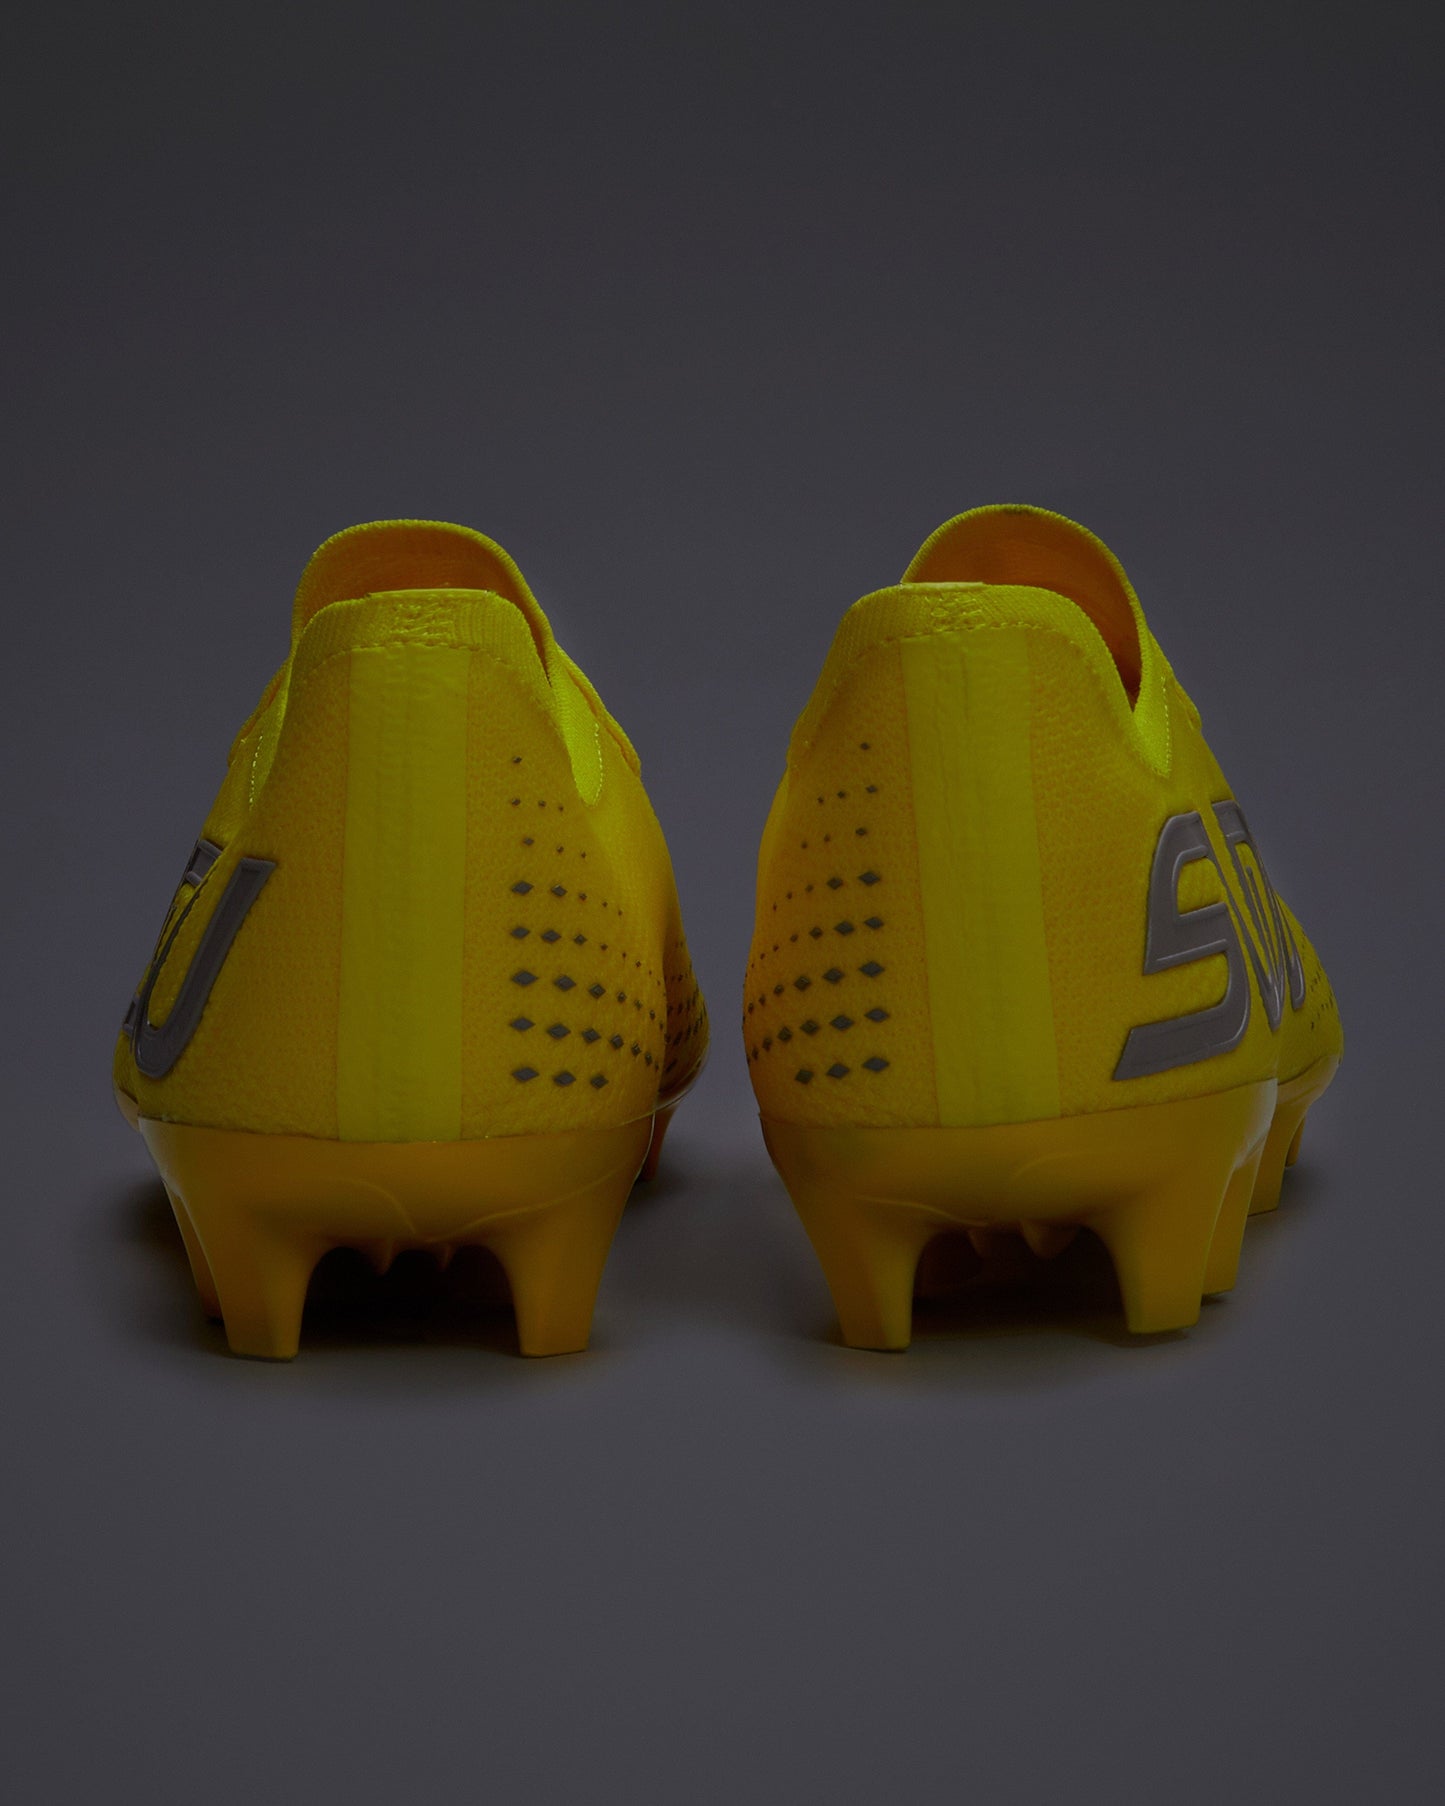 SUDU SFS FG 01+ Pro football boots - Yellow Football Boots